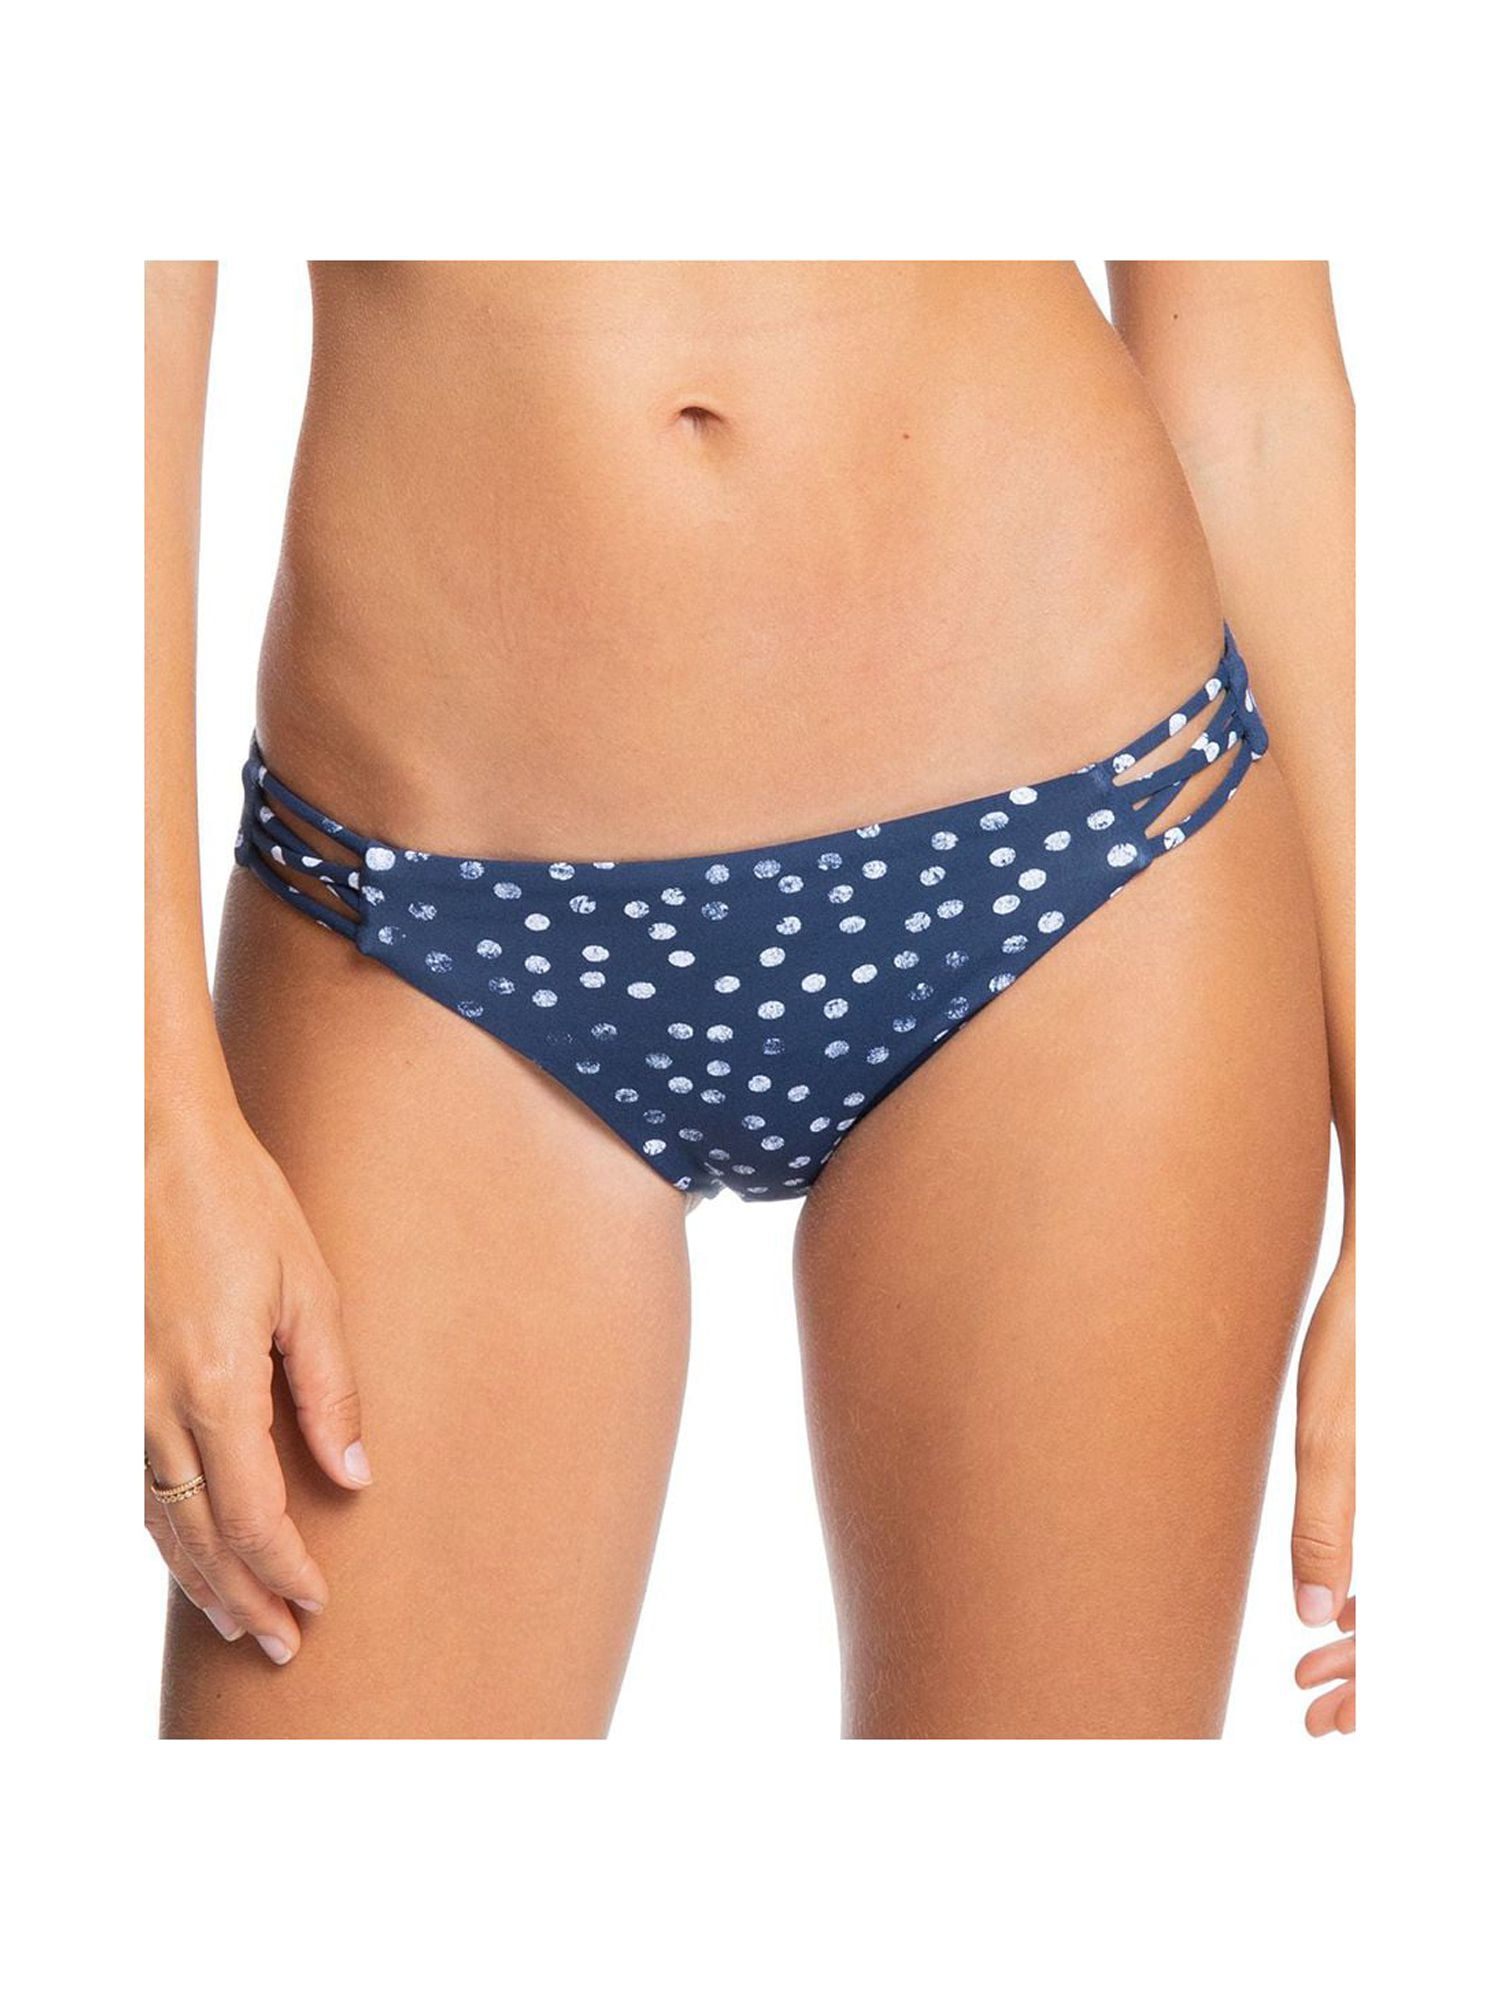 ROXY Women's Blue Polka Dot Stretch Lined Full Coverage Strappy Beach  Classics Bikini Swimsuit Bottom XL 